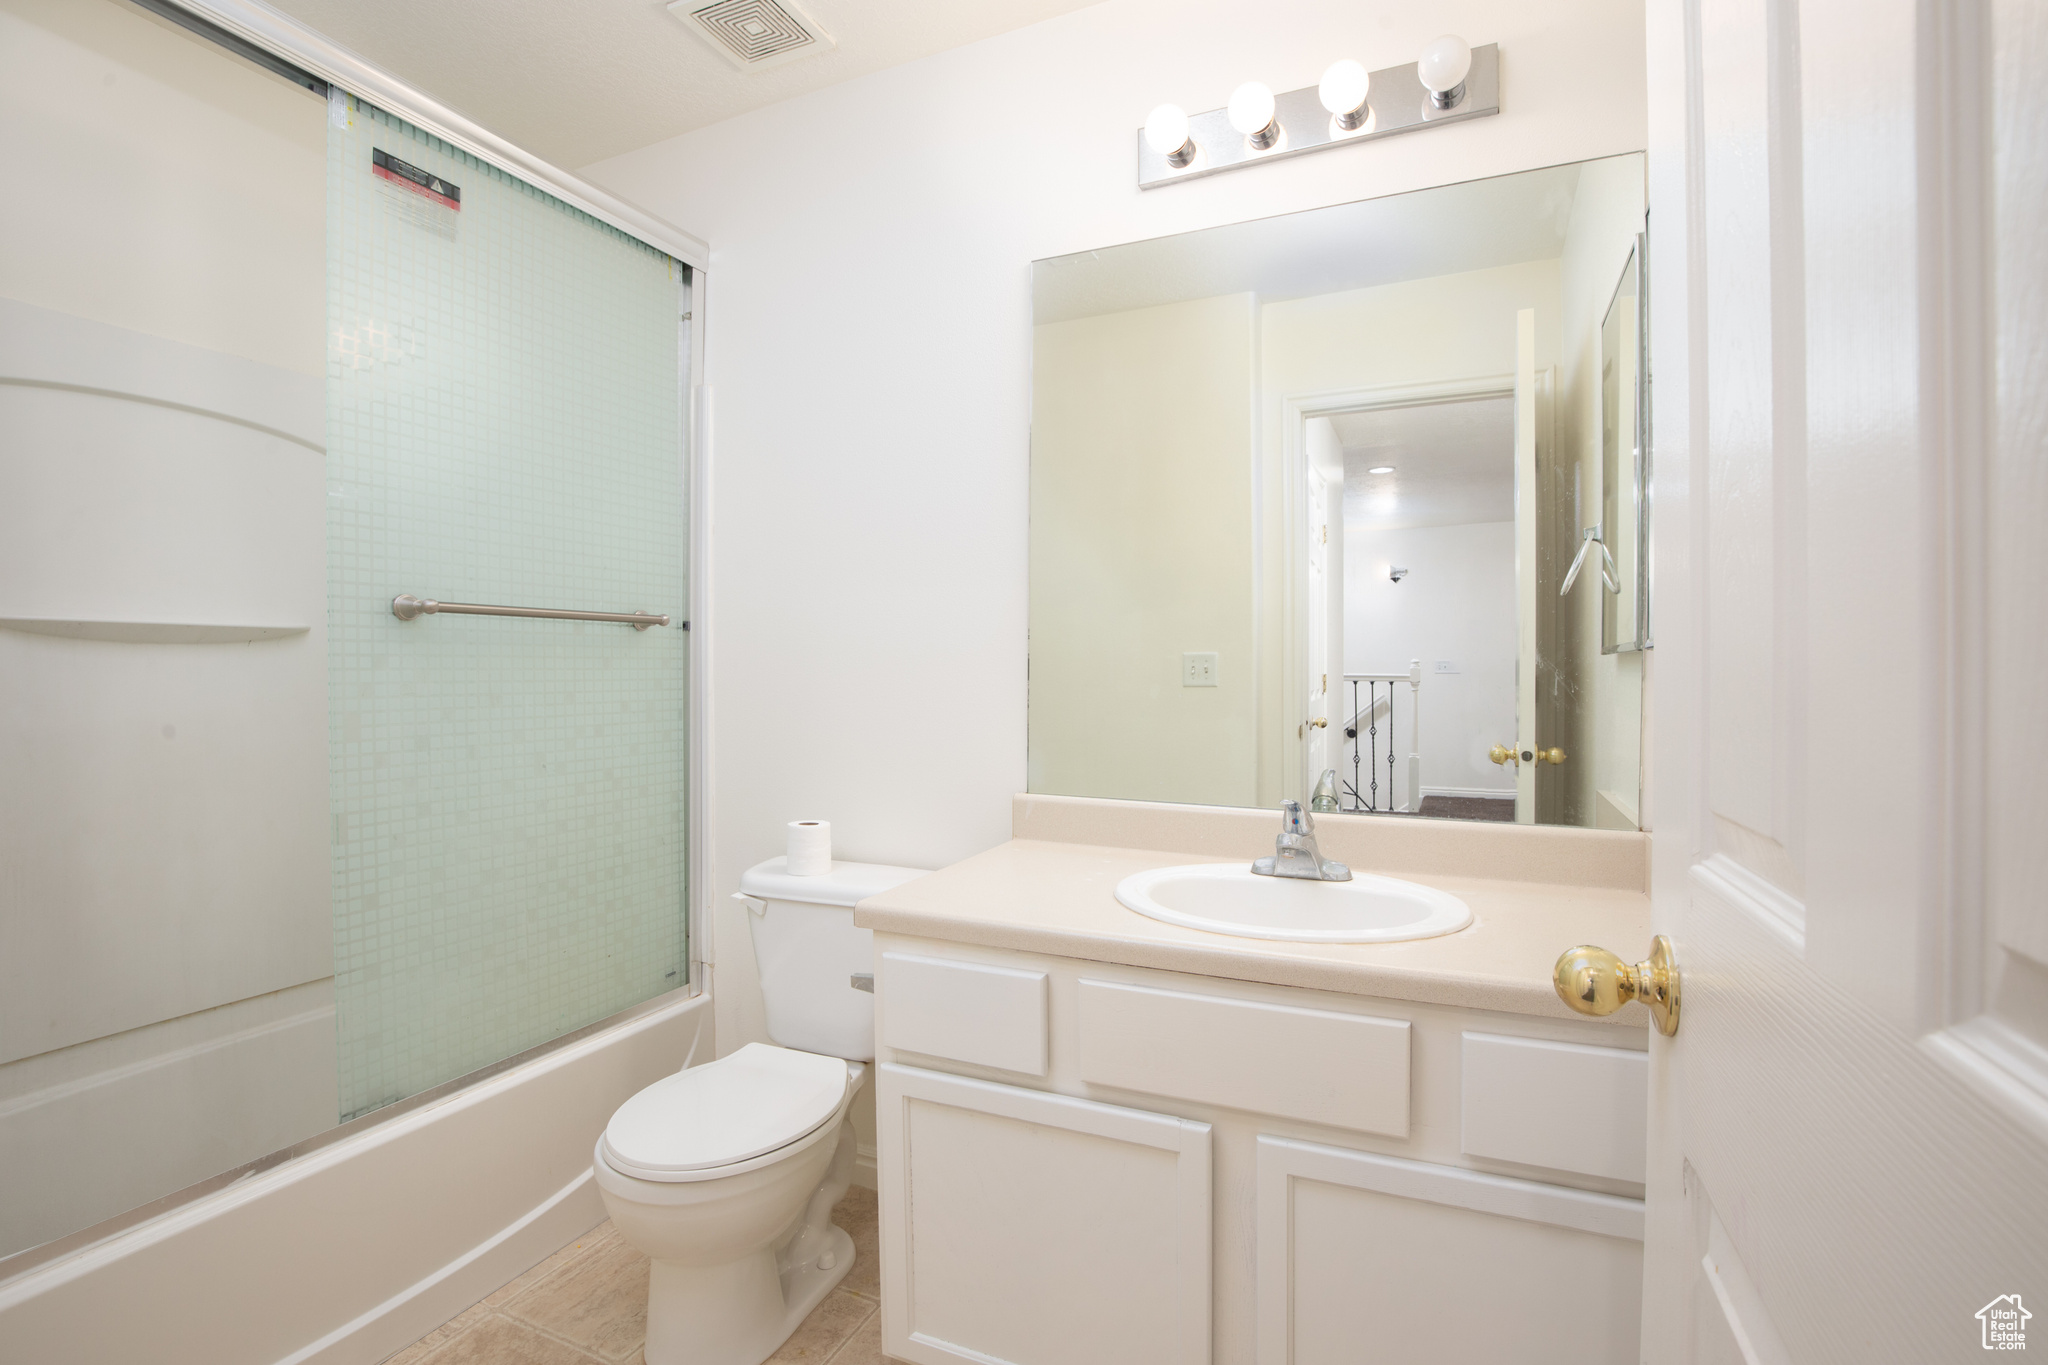 Full bathroom with tile flooring, vanity, toilet, and shower / bath combination with glass door